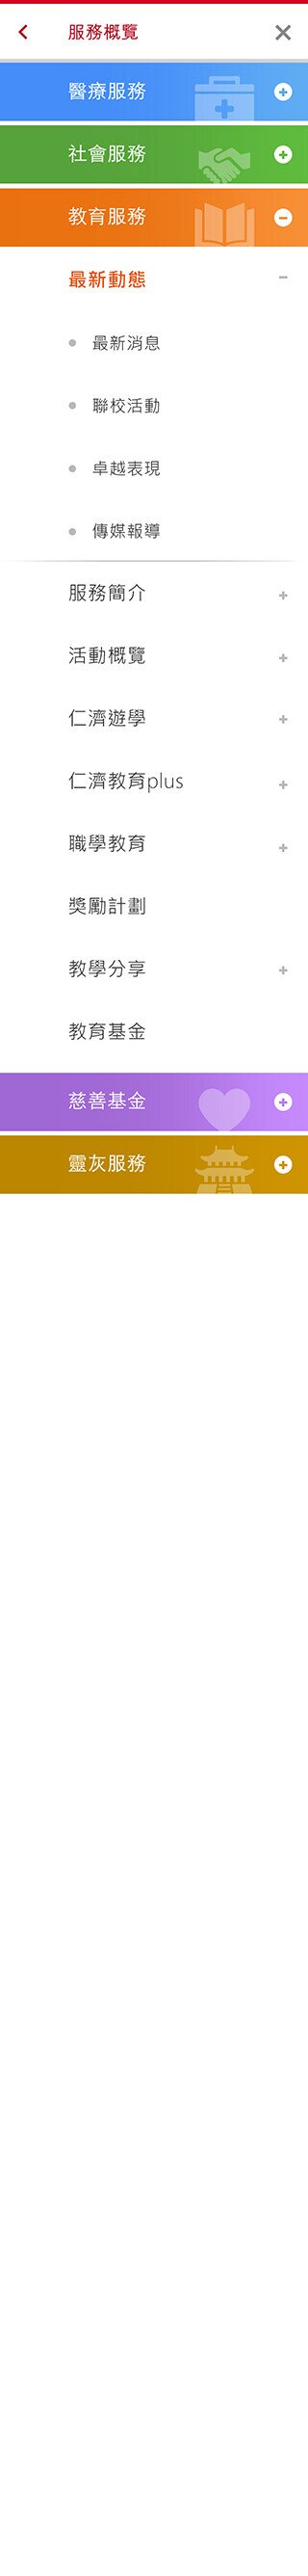 Yan Chai Hospital website screenshot for mobile version 3 of 5